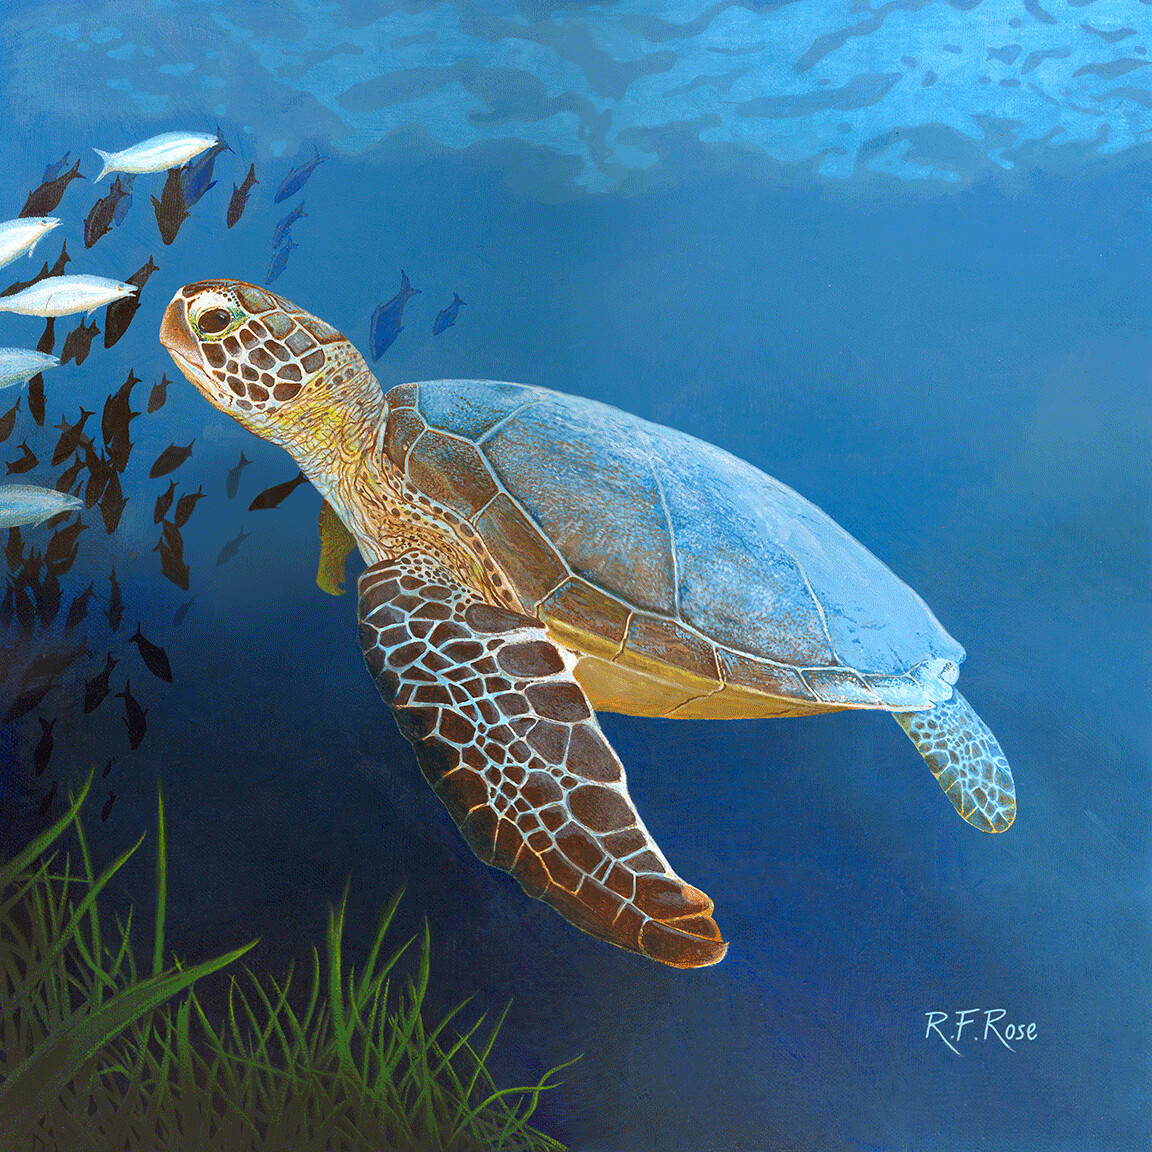 "Sea Turtle" by Richard F. Rose